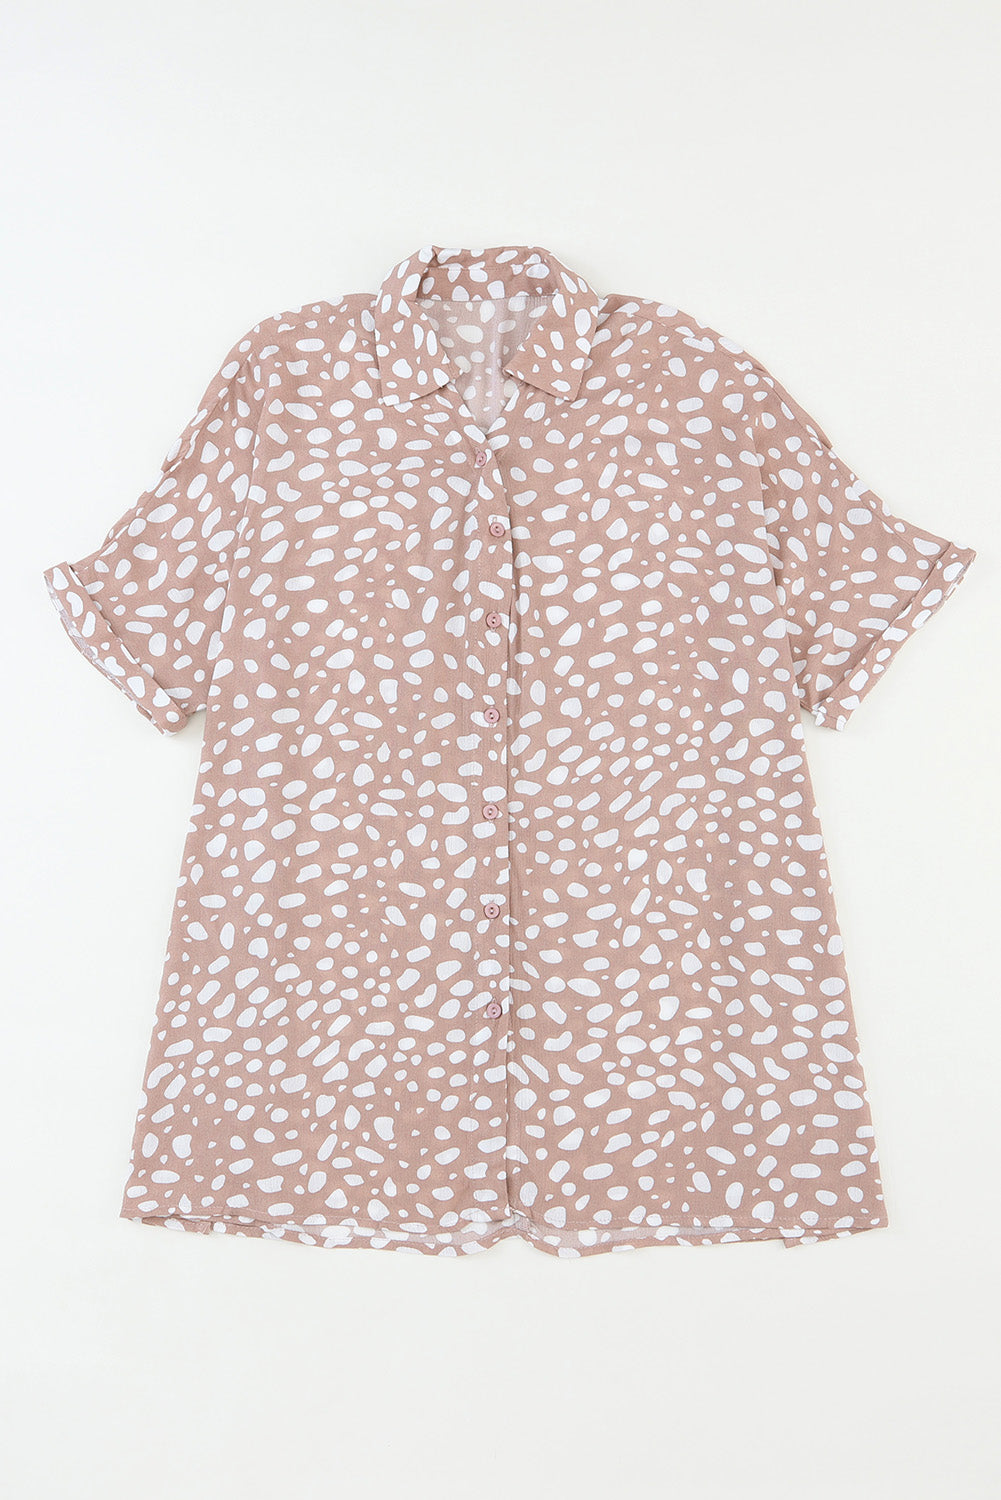 Pink Leopard Printed Short Sleeves Twist Shirt Naughty Smile Fashion